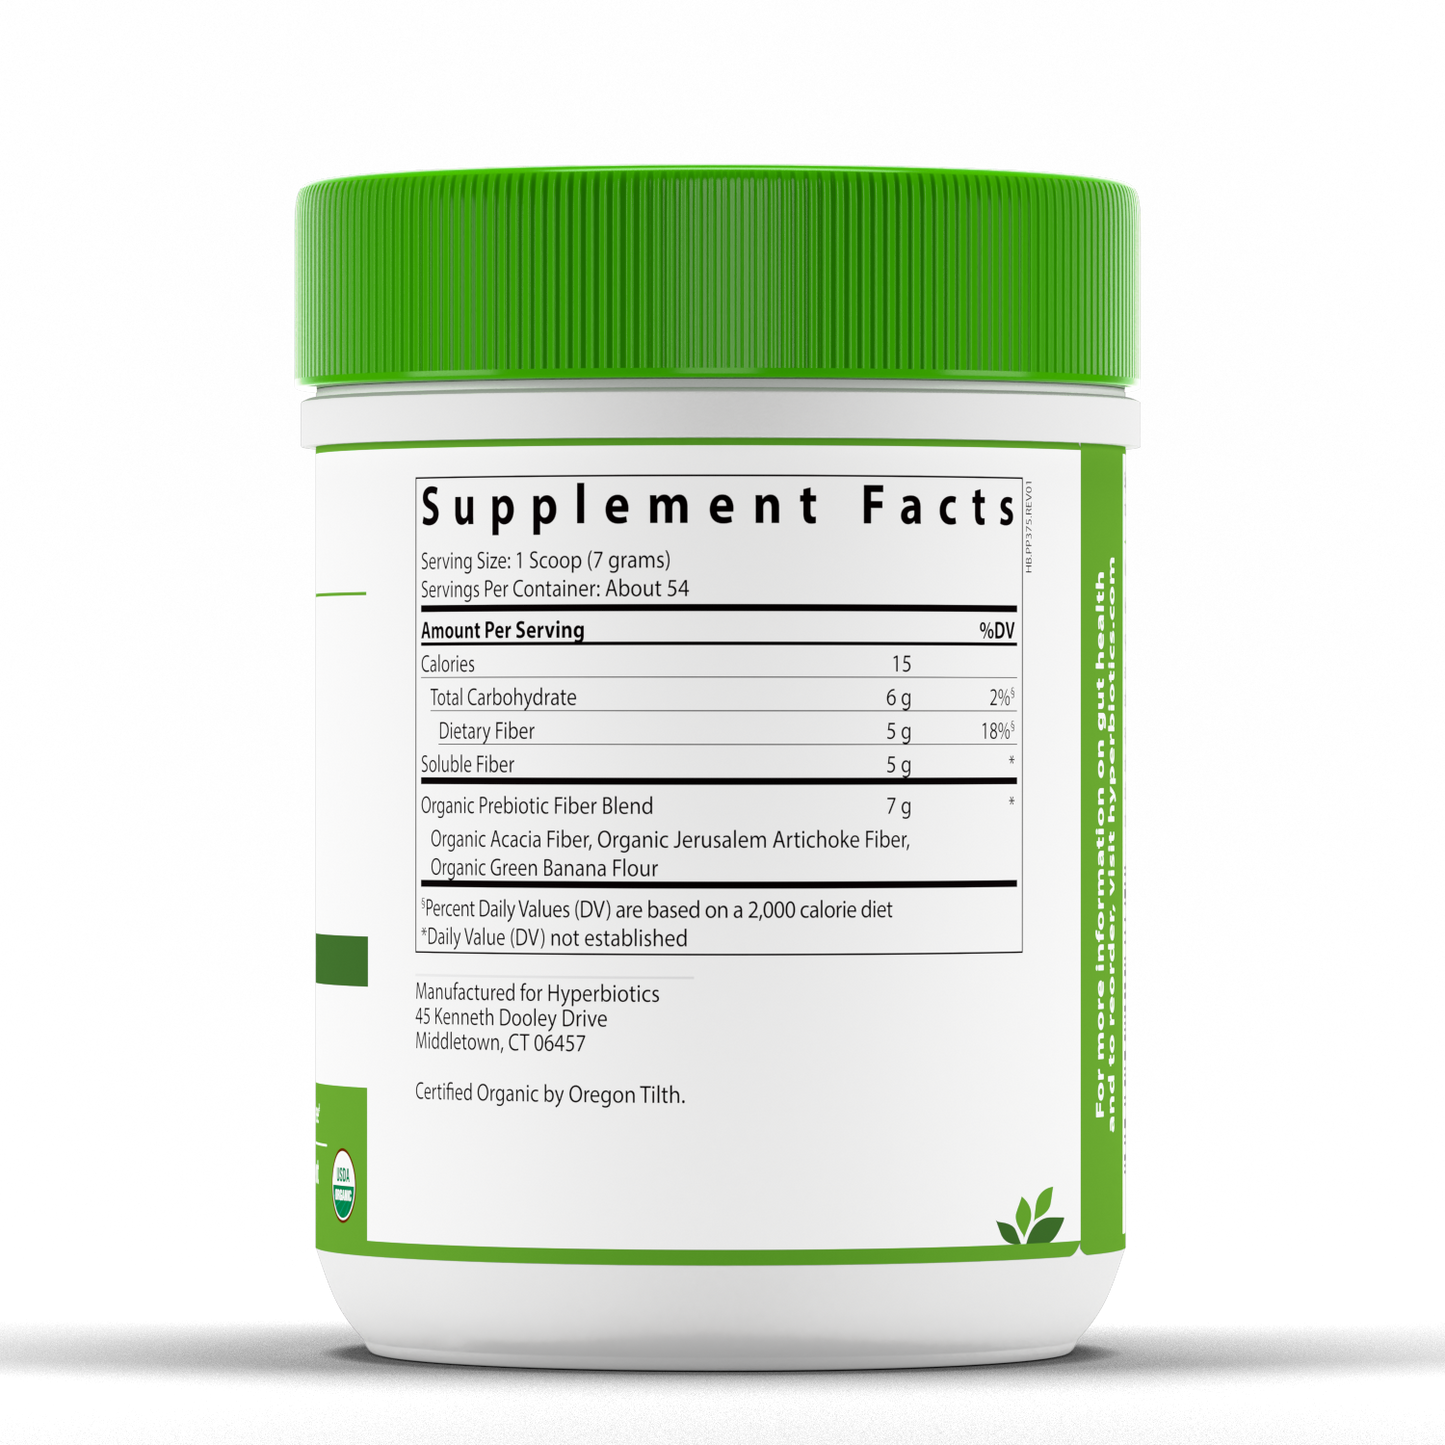 Hyperbiotics Prebiotic Powder Supplement Facts panel on container